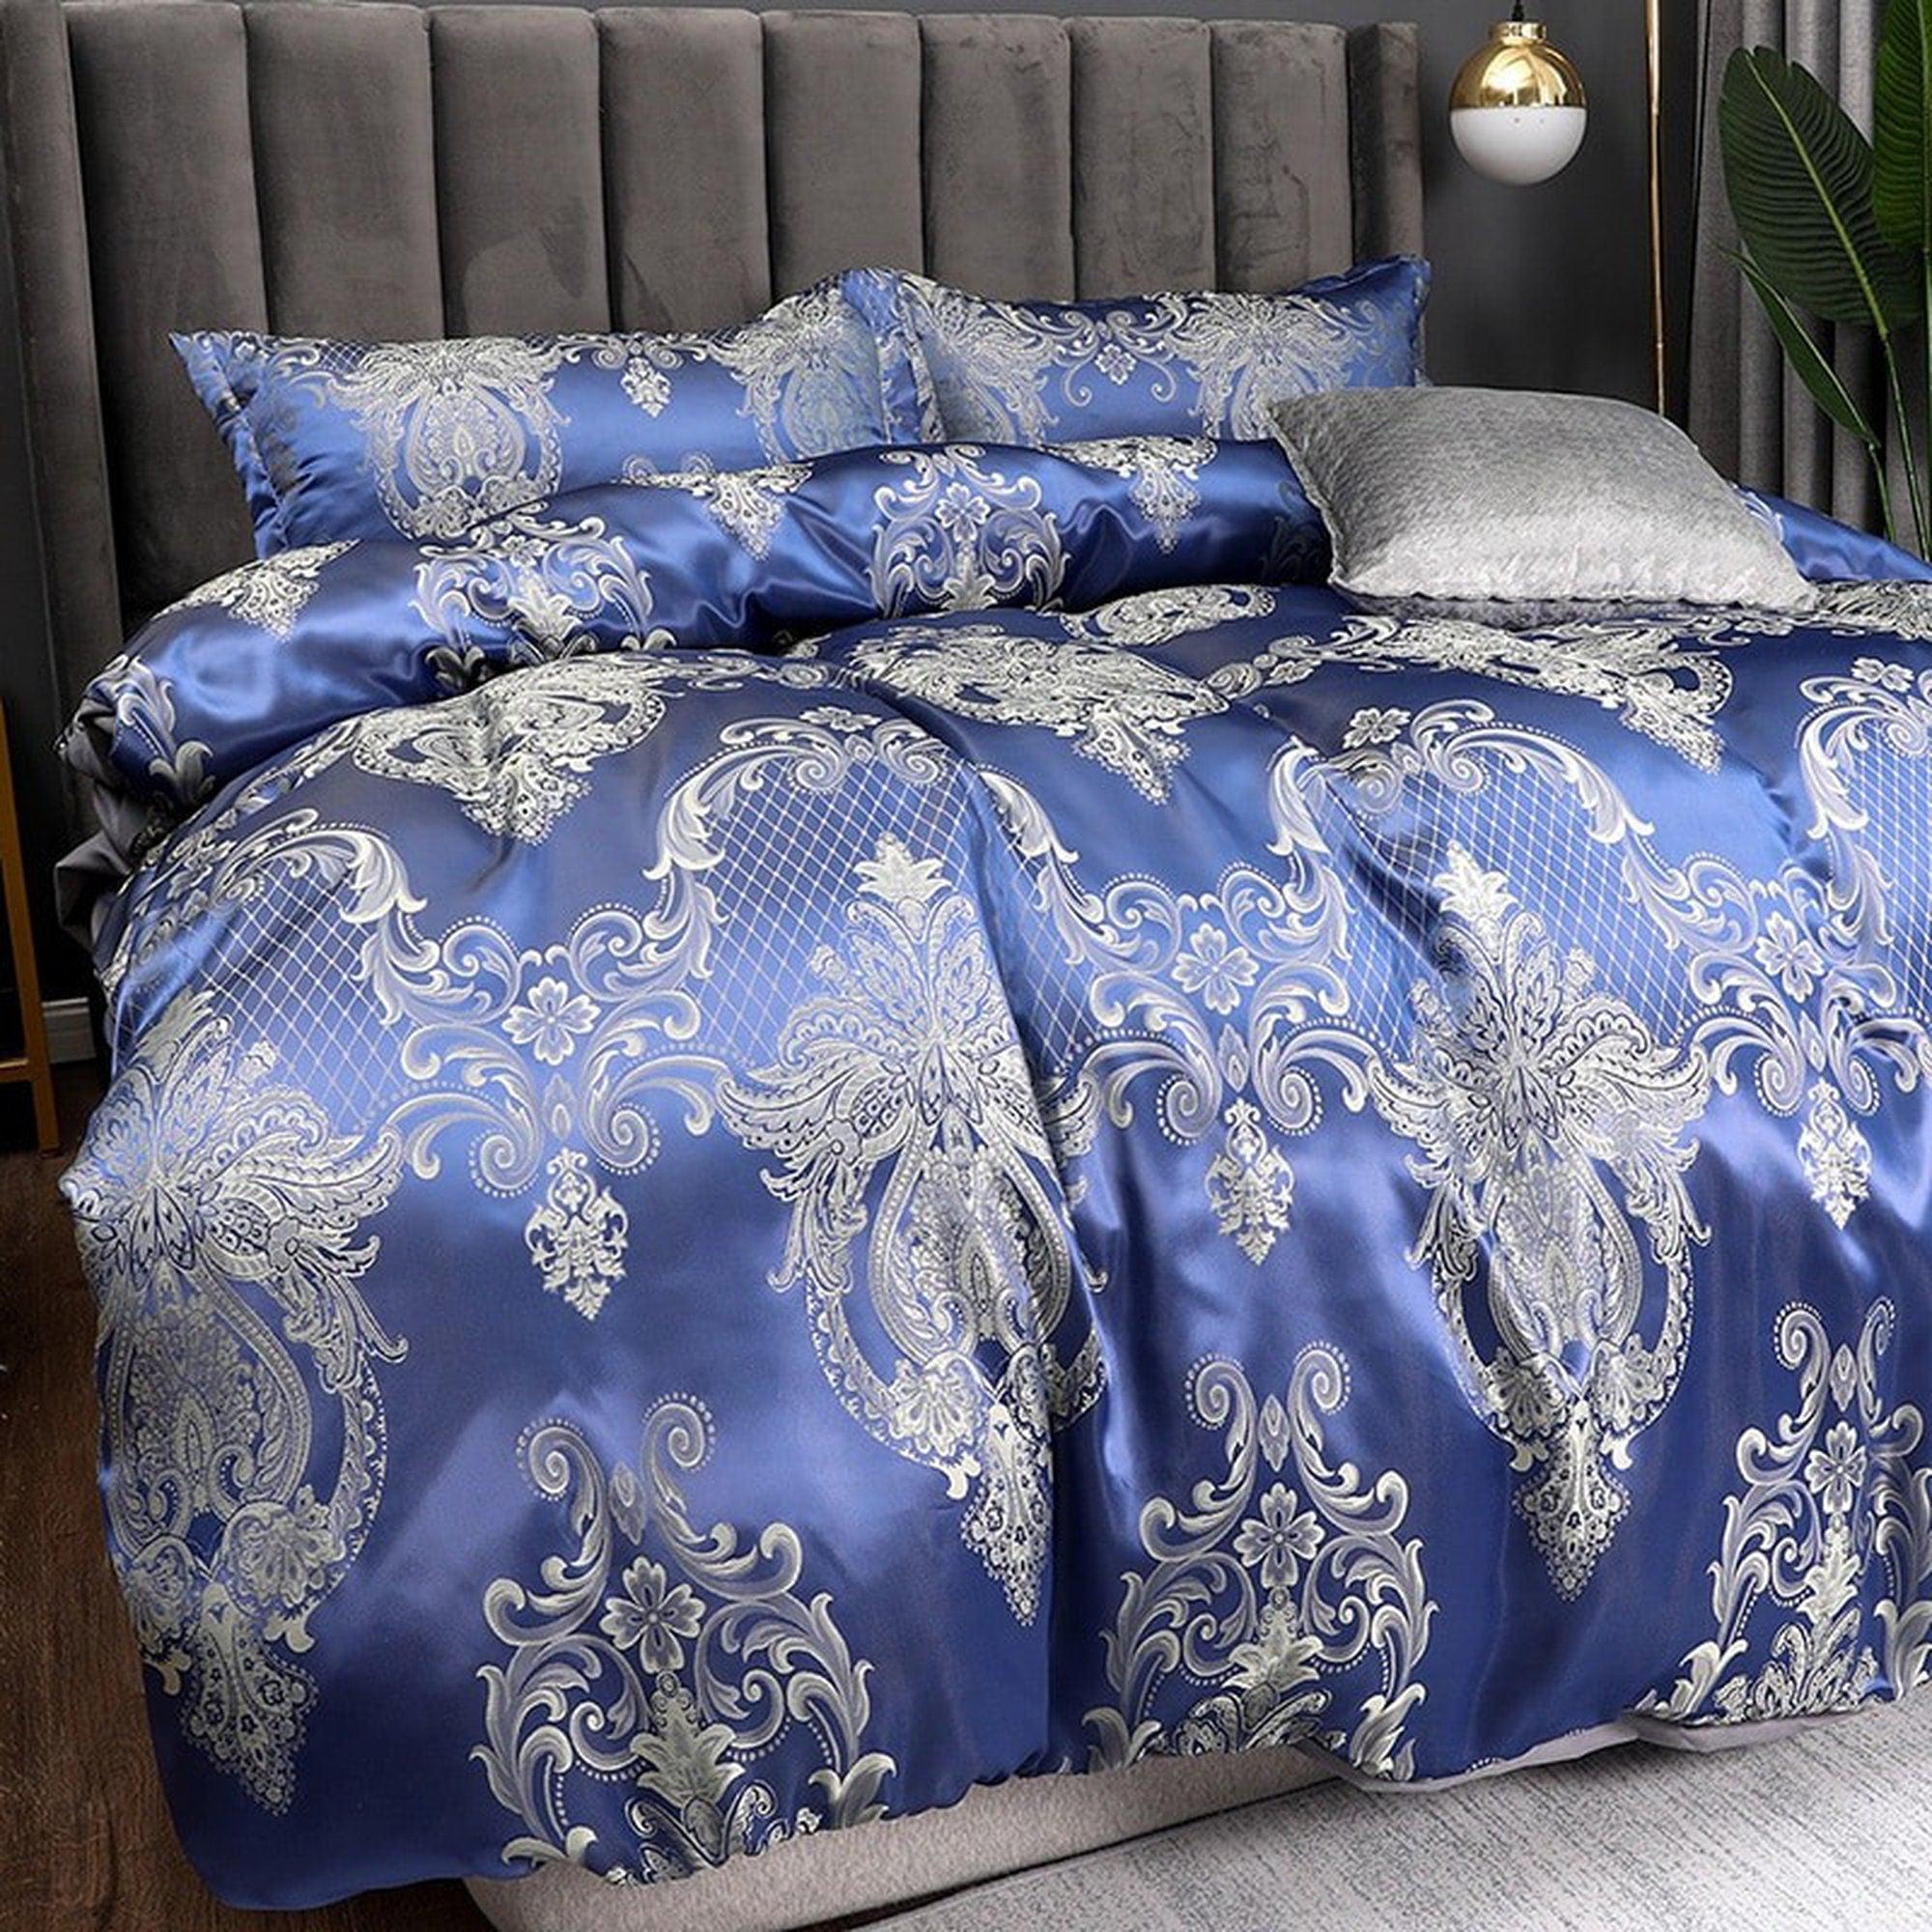 daintyduvet Sapphire Blue Luxury Bedding made with Silky Jacquard Fabric, Embroidered Duvet Cover Set, Designer Bedding, Aesthetic Duvet King Queen Full